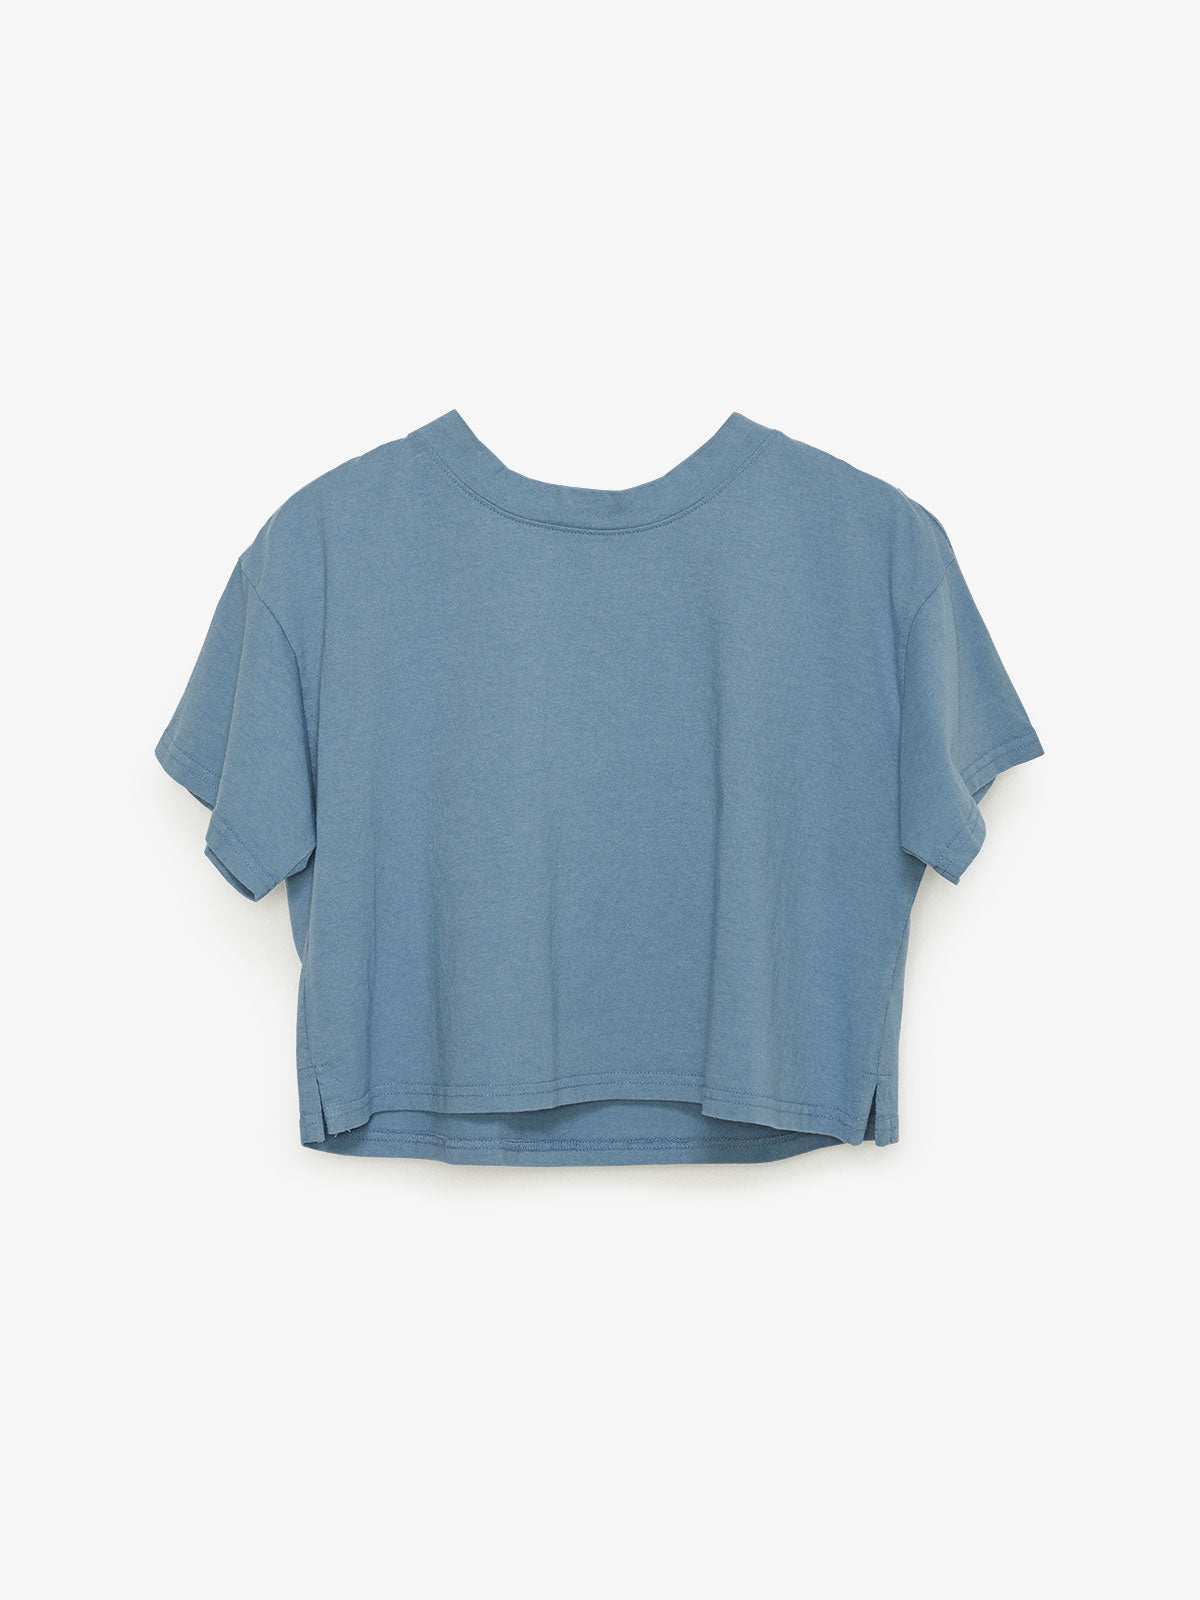 CALPAK women's cropped cotton t-shirt in blue